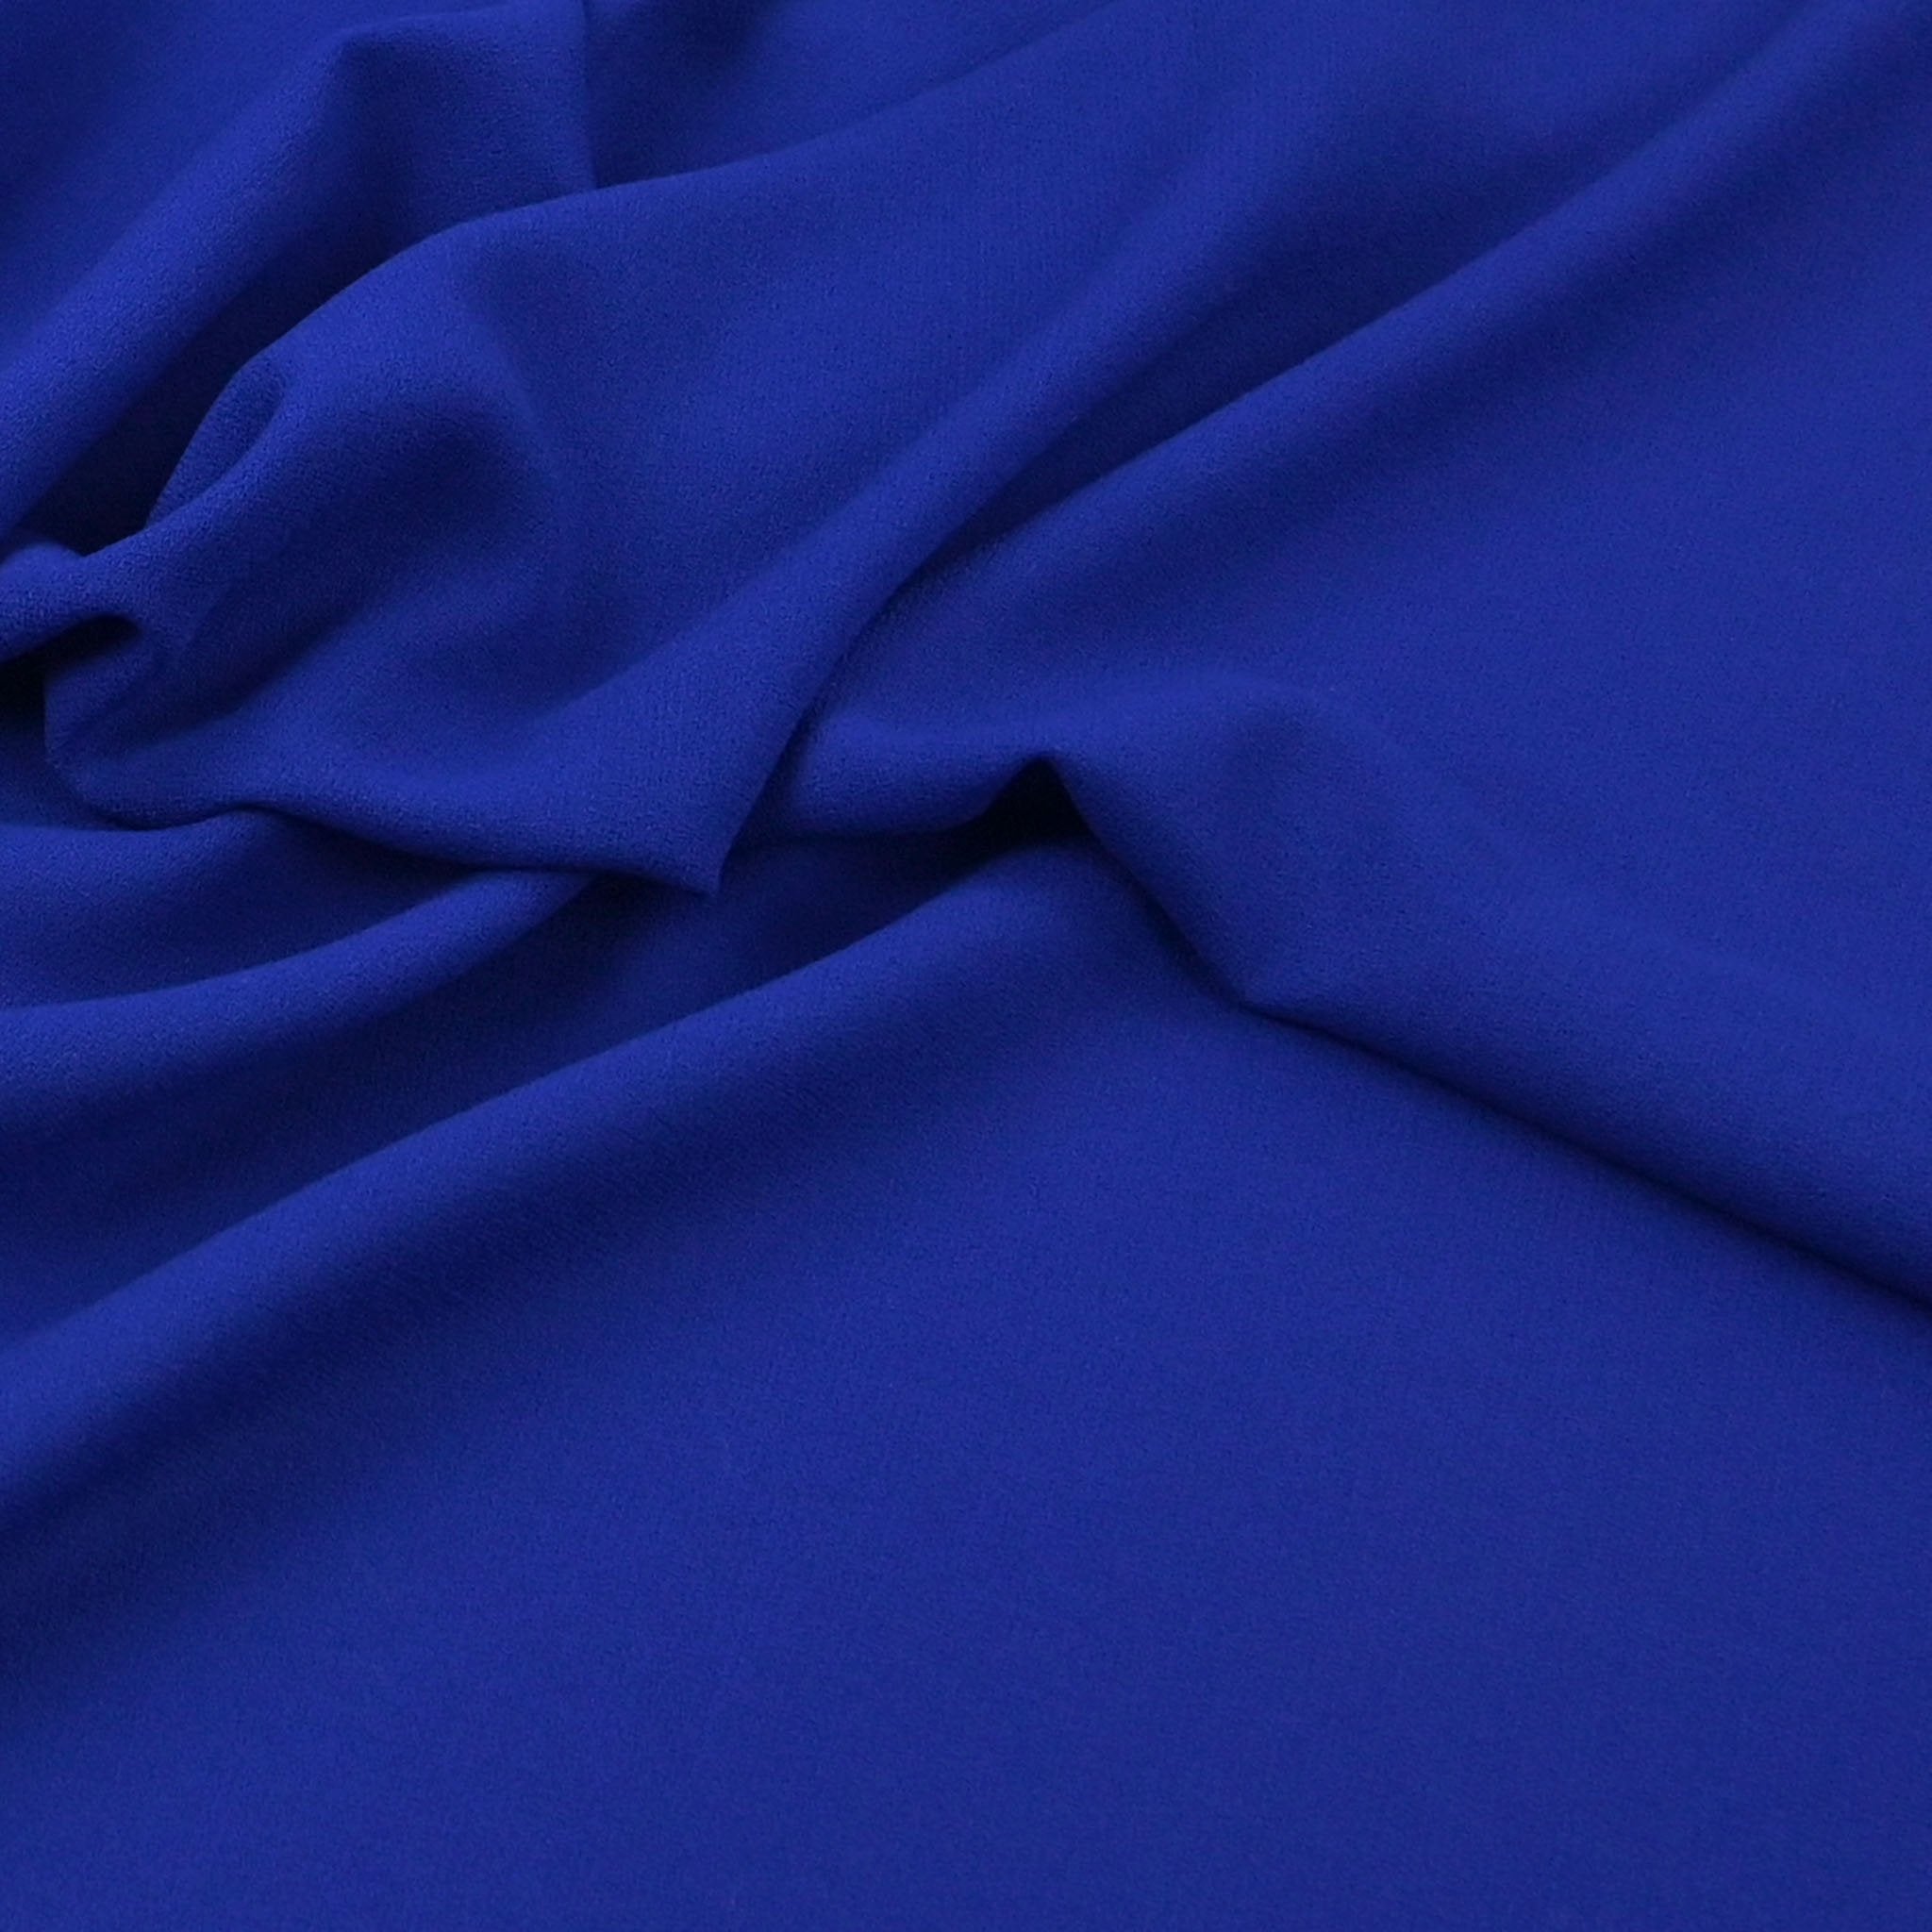 Royal Blue Crepe Fabric 97202